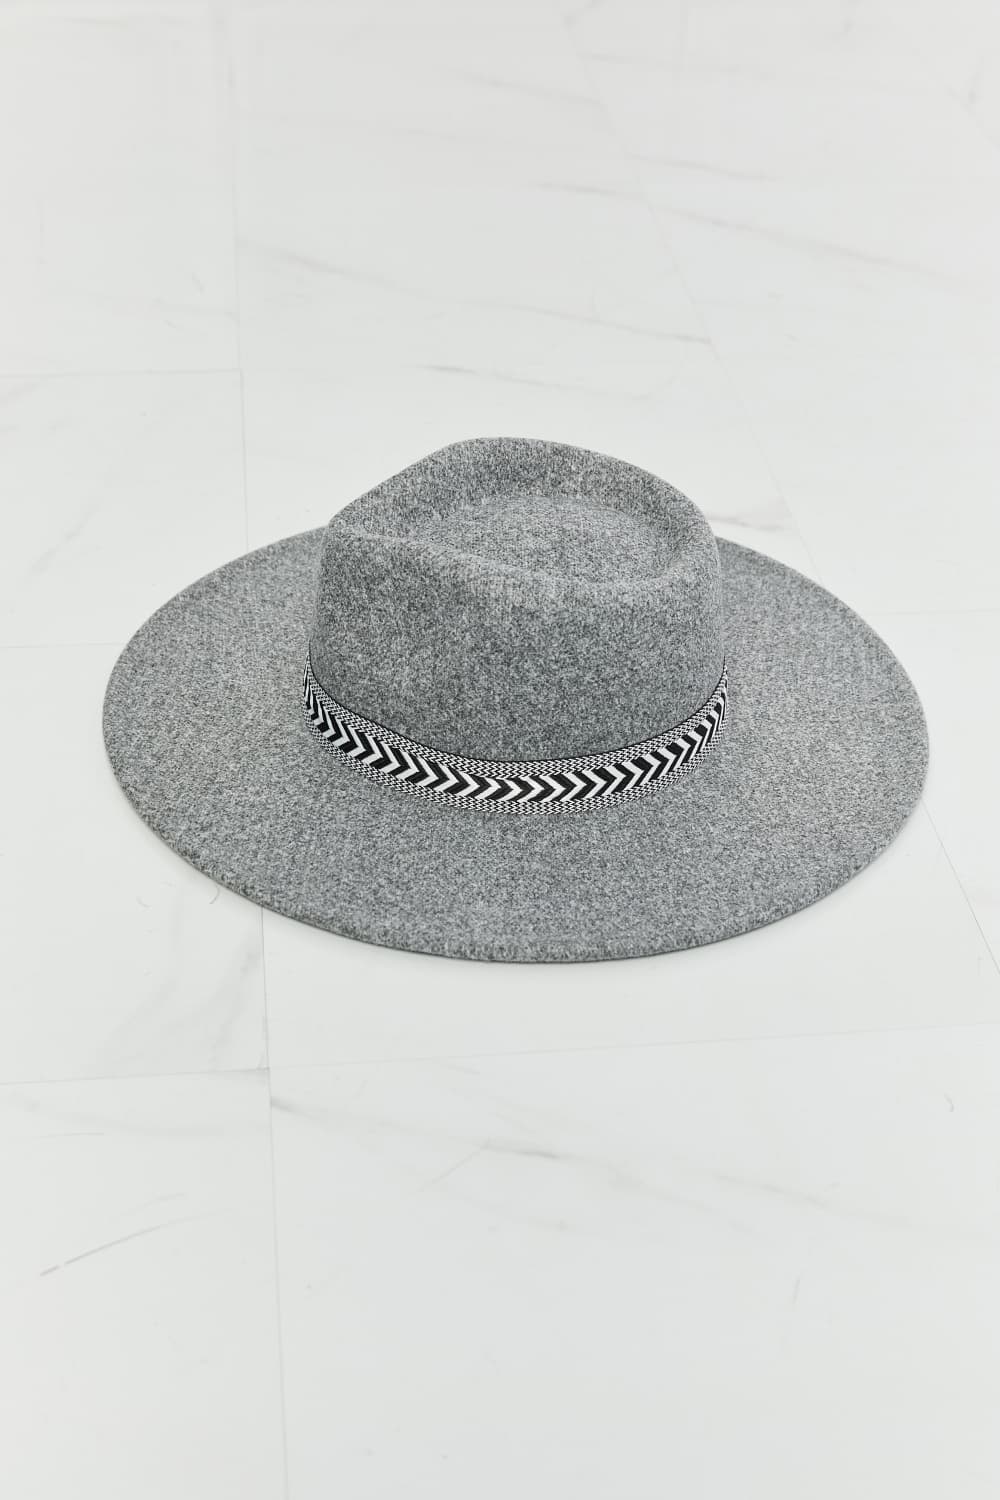 The Classy Grey Fedora Hat